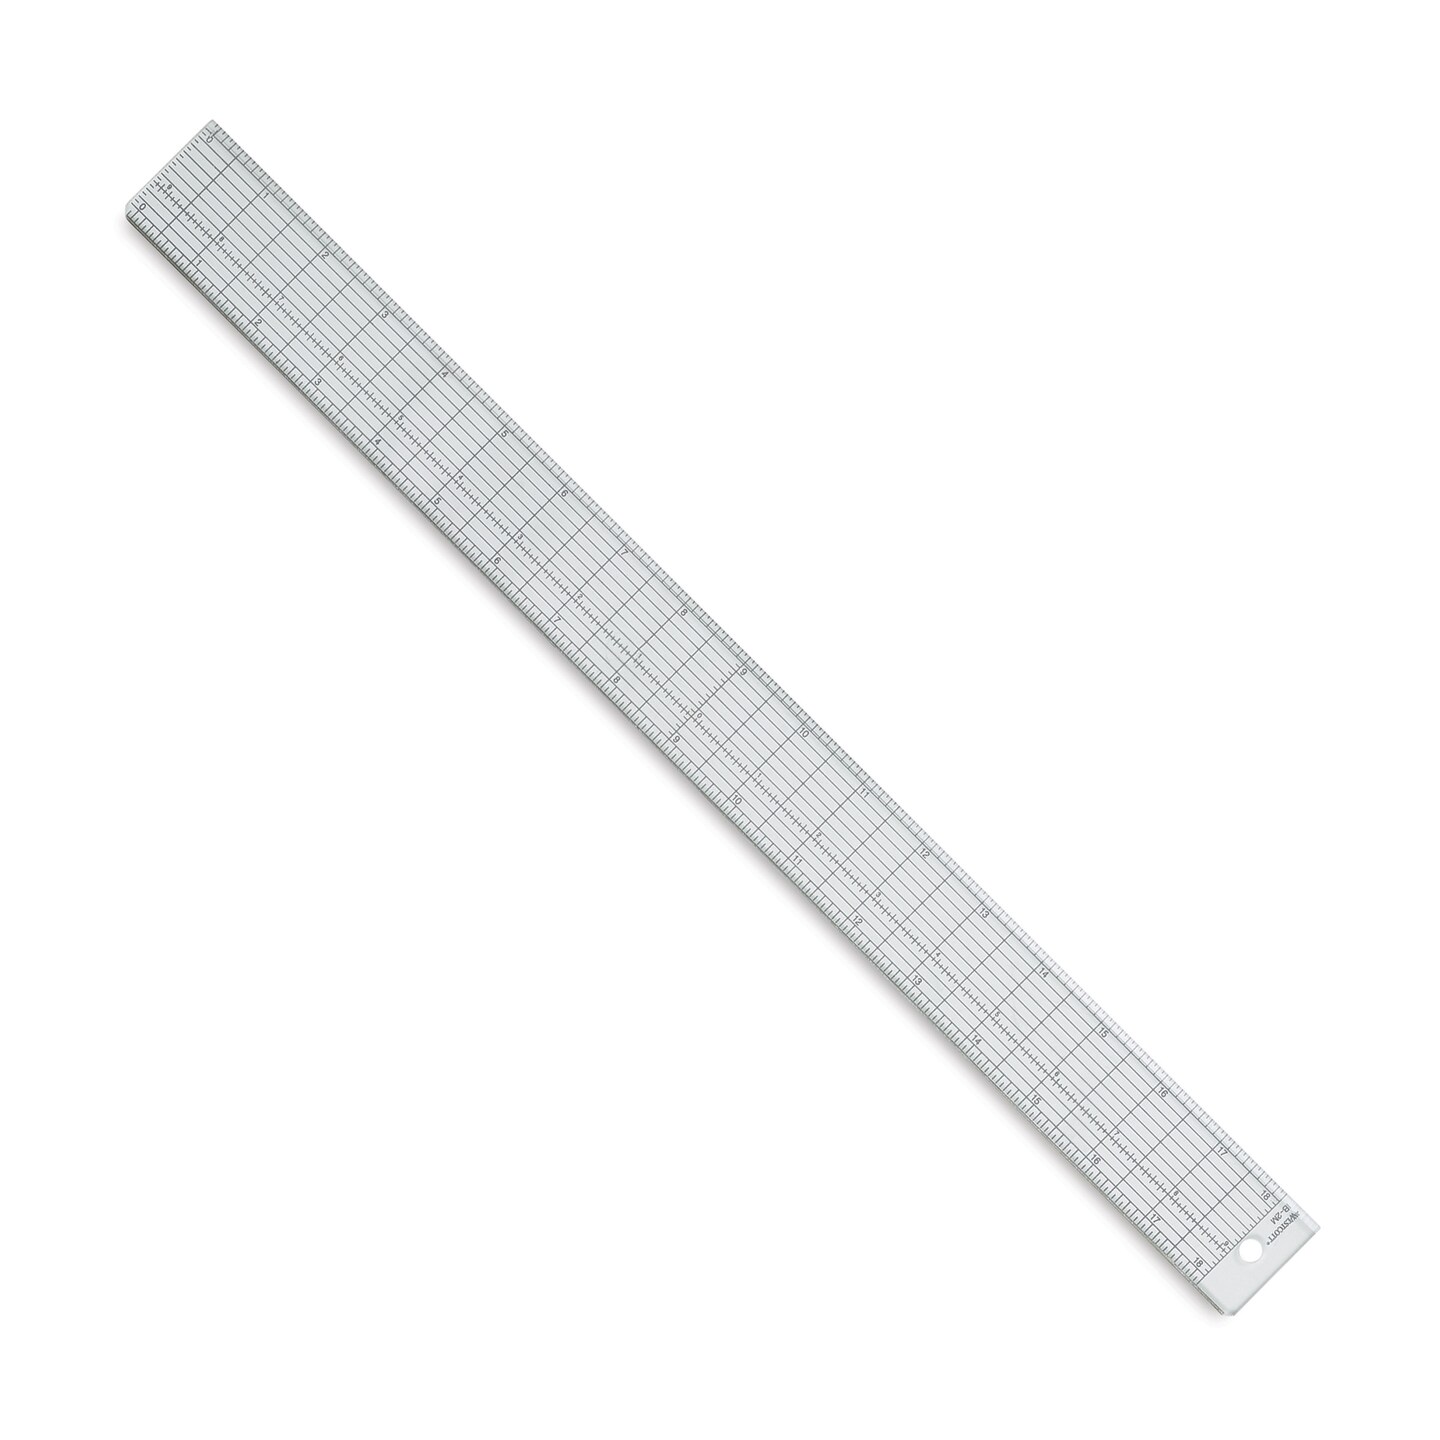 Westcott Grid Ruler - 18, Clear Plastic